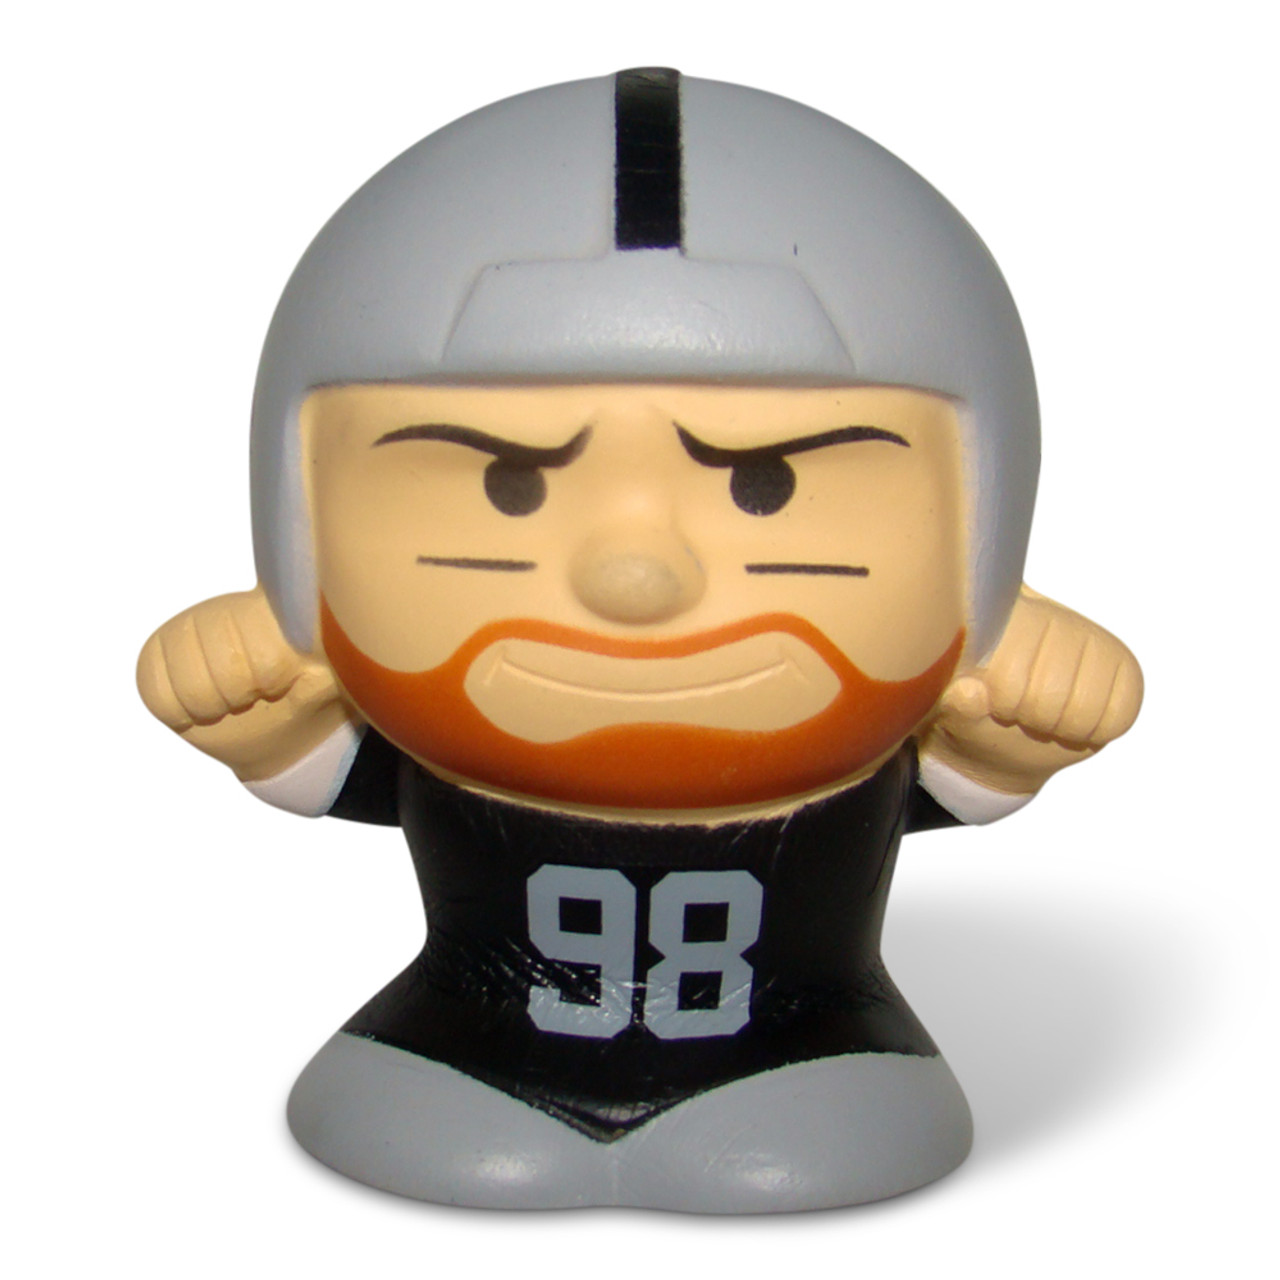 Maxx Crosby Las Vegas Raiders # 98 Series 2 Jumbo SqueezyMate NFL Figurine